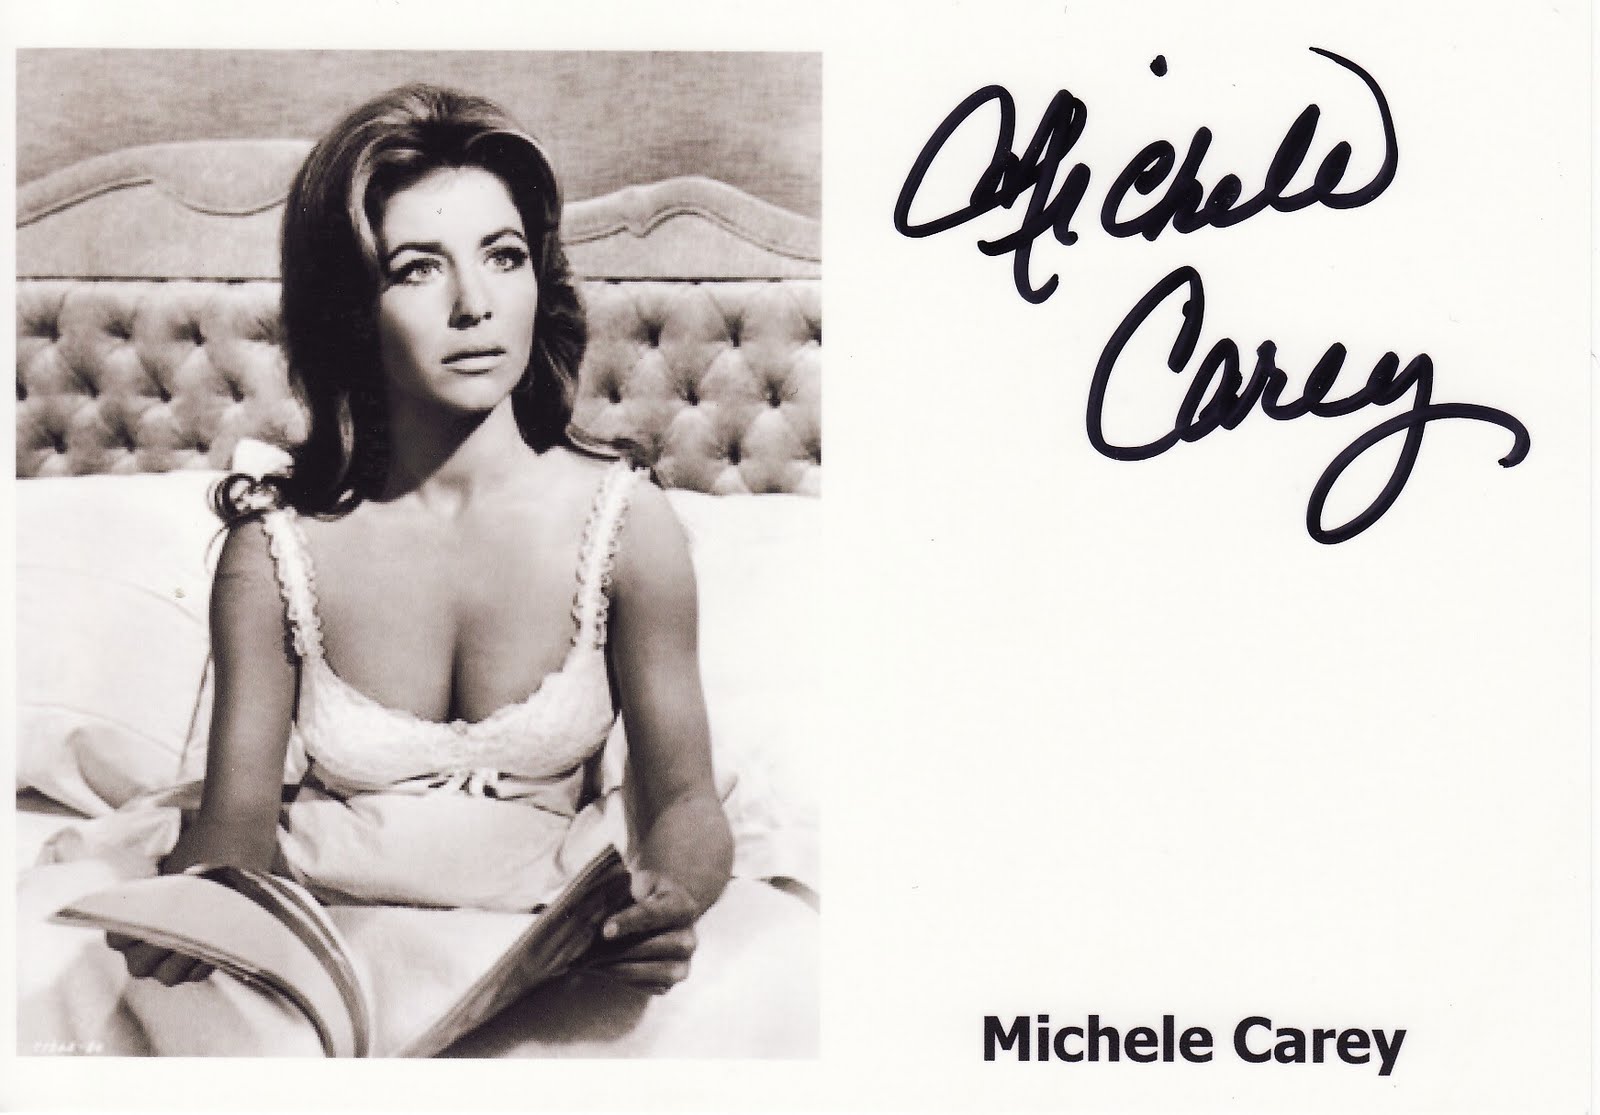 Michele carey movies